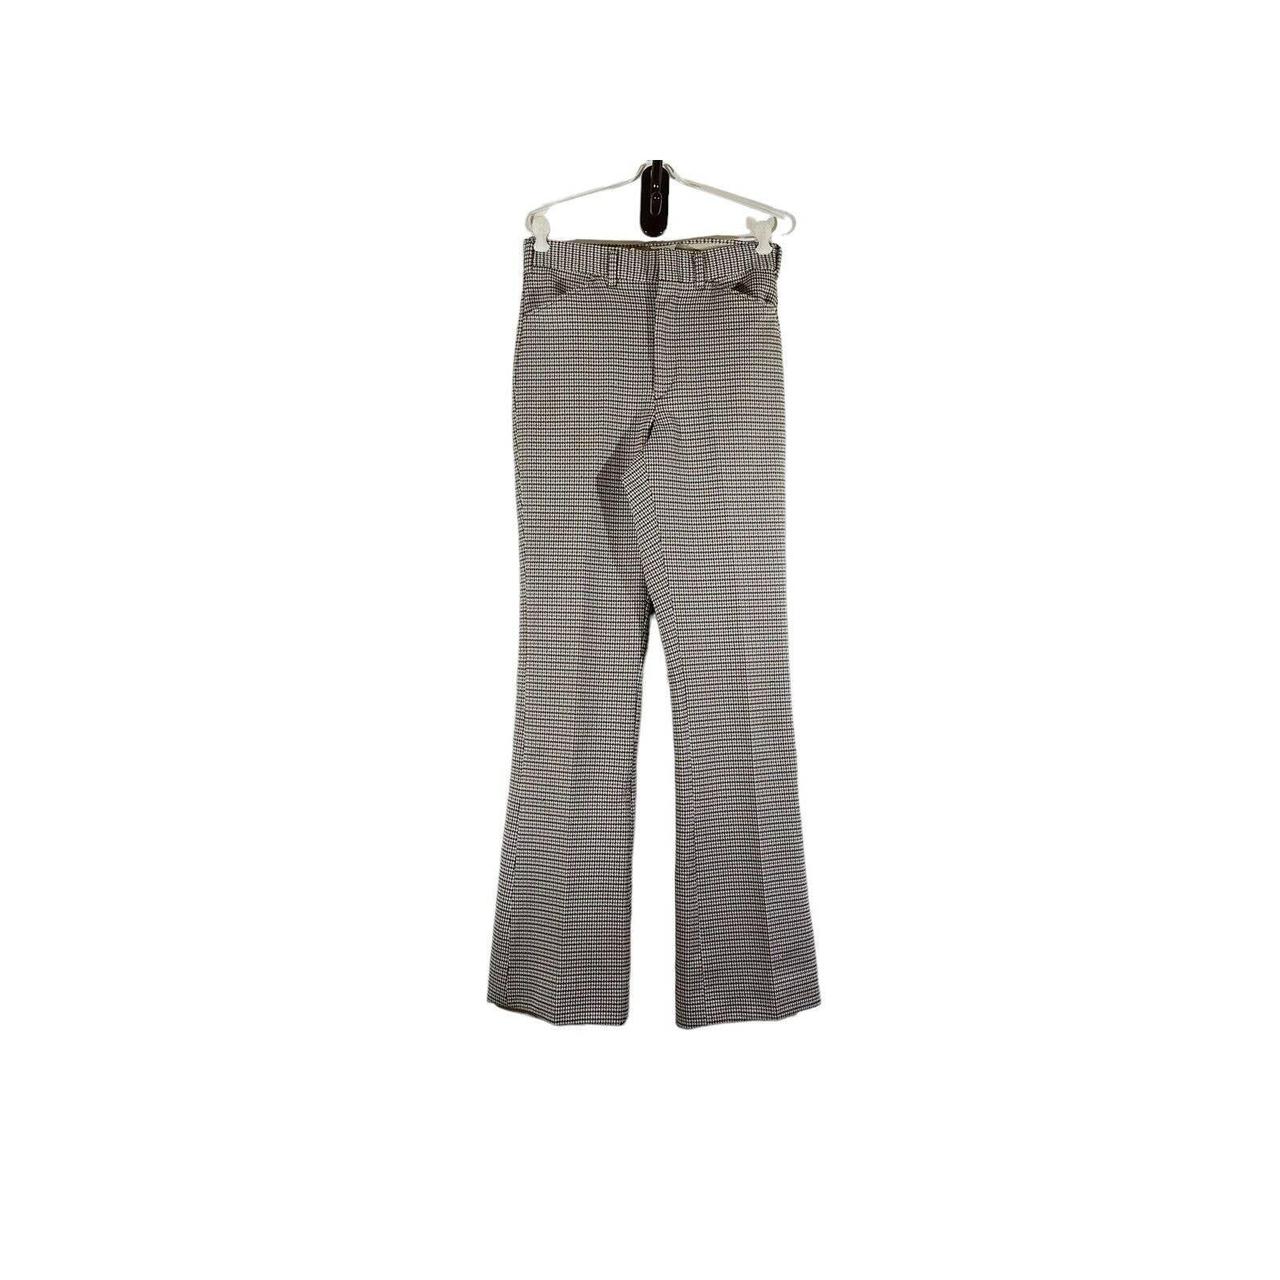 HAORUN Men Bell Bottom Jeans Slim Fit Flared Denim Pants 60s 70s Retro  Trousers (2-Dark Grey, 30) at Amazon Men's Clothing store